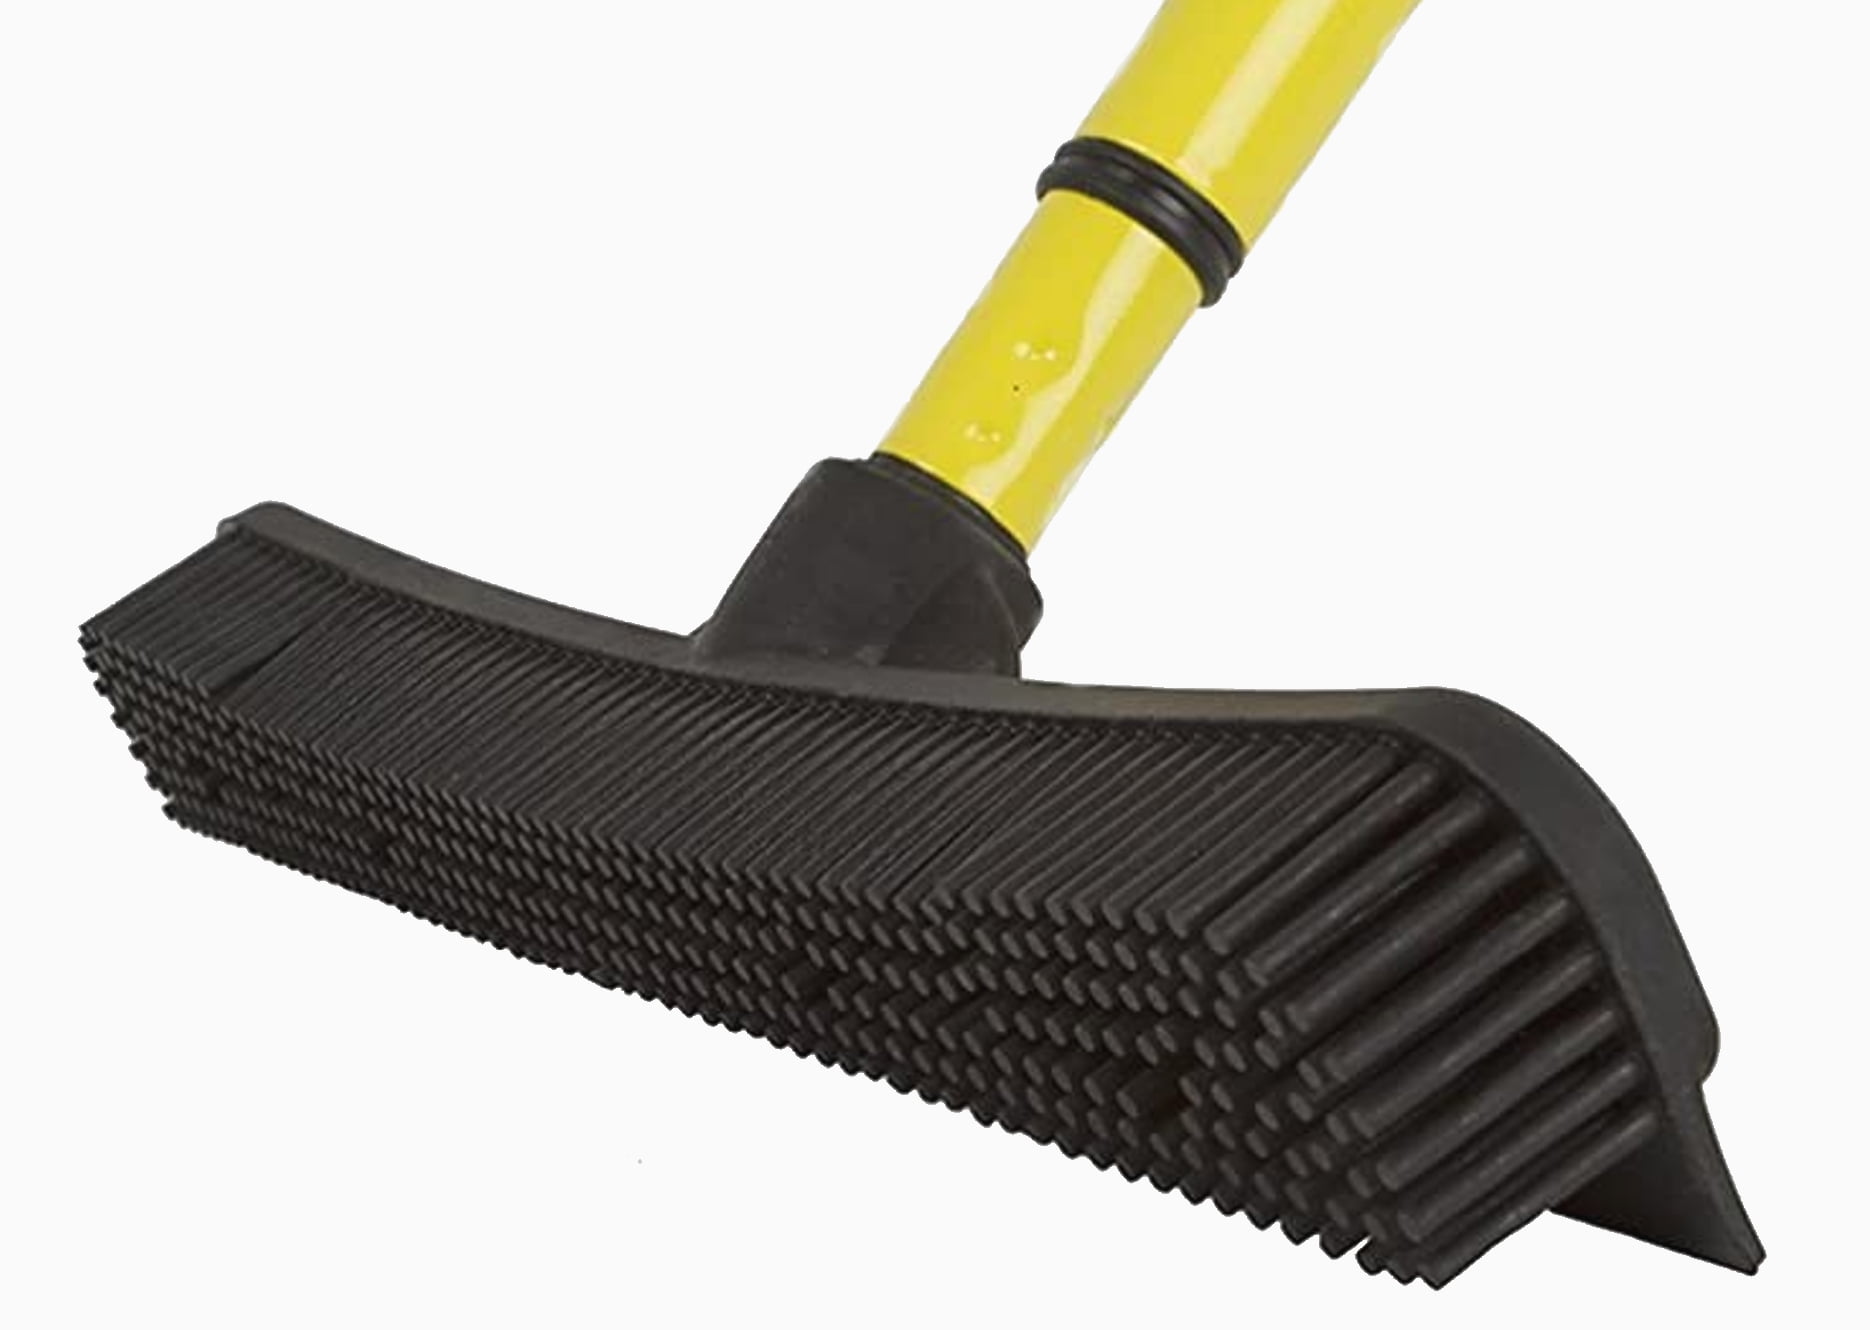 Creative V-Shaped Brush Crevice Cleaning Broom 120 Head Brush Rubber. E4B6